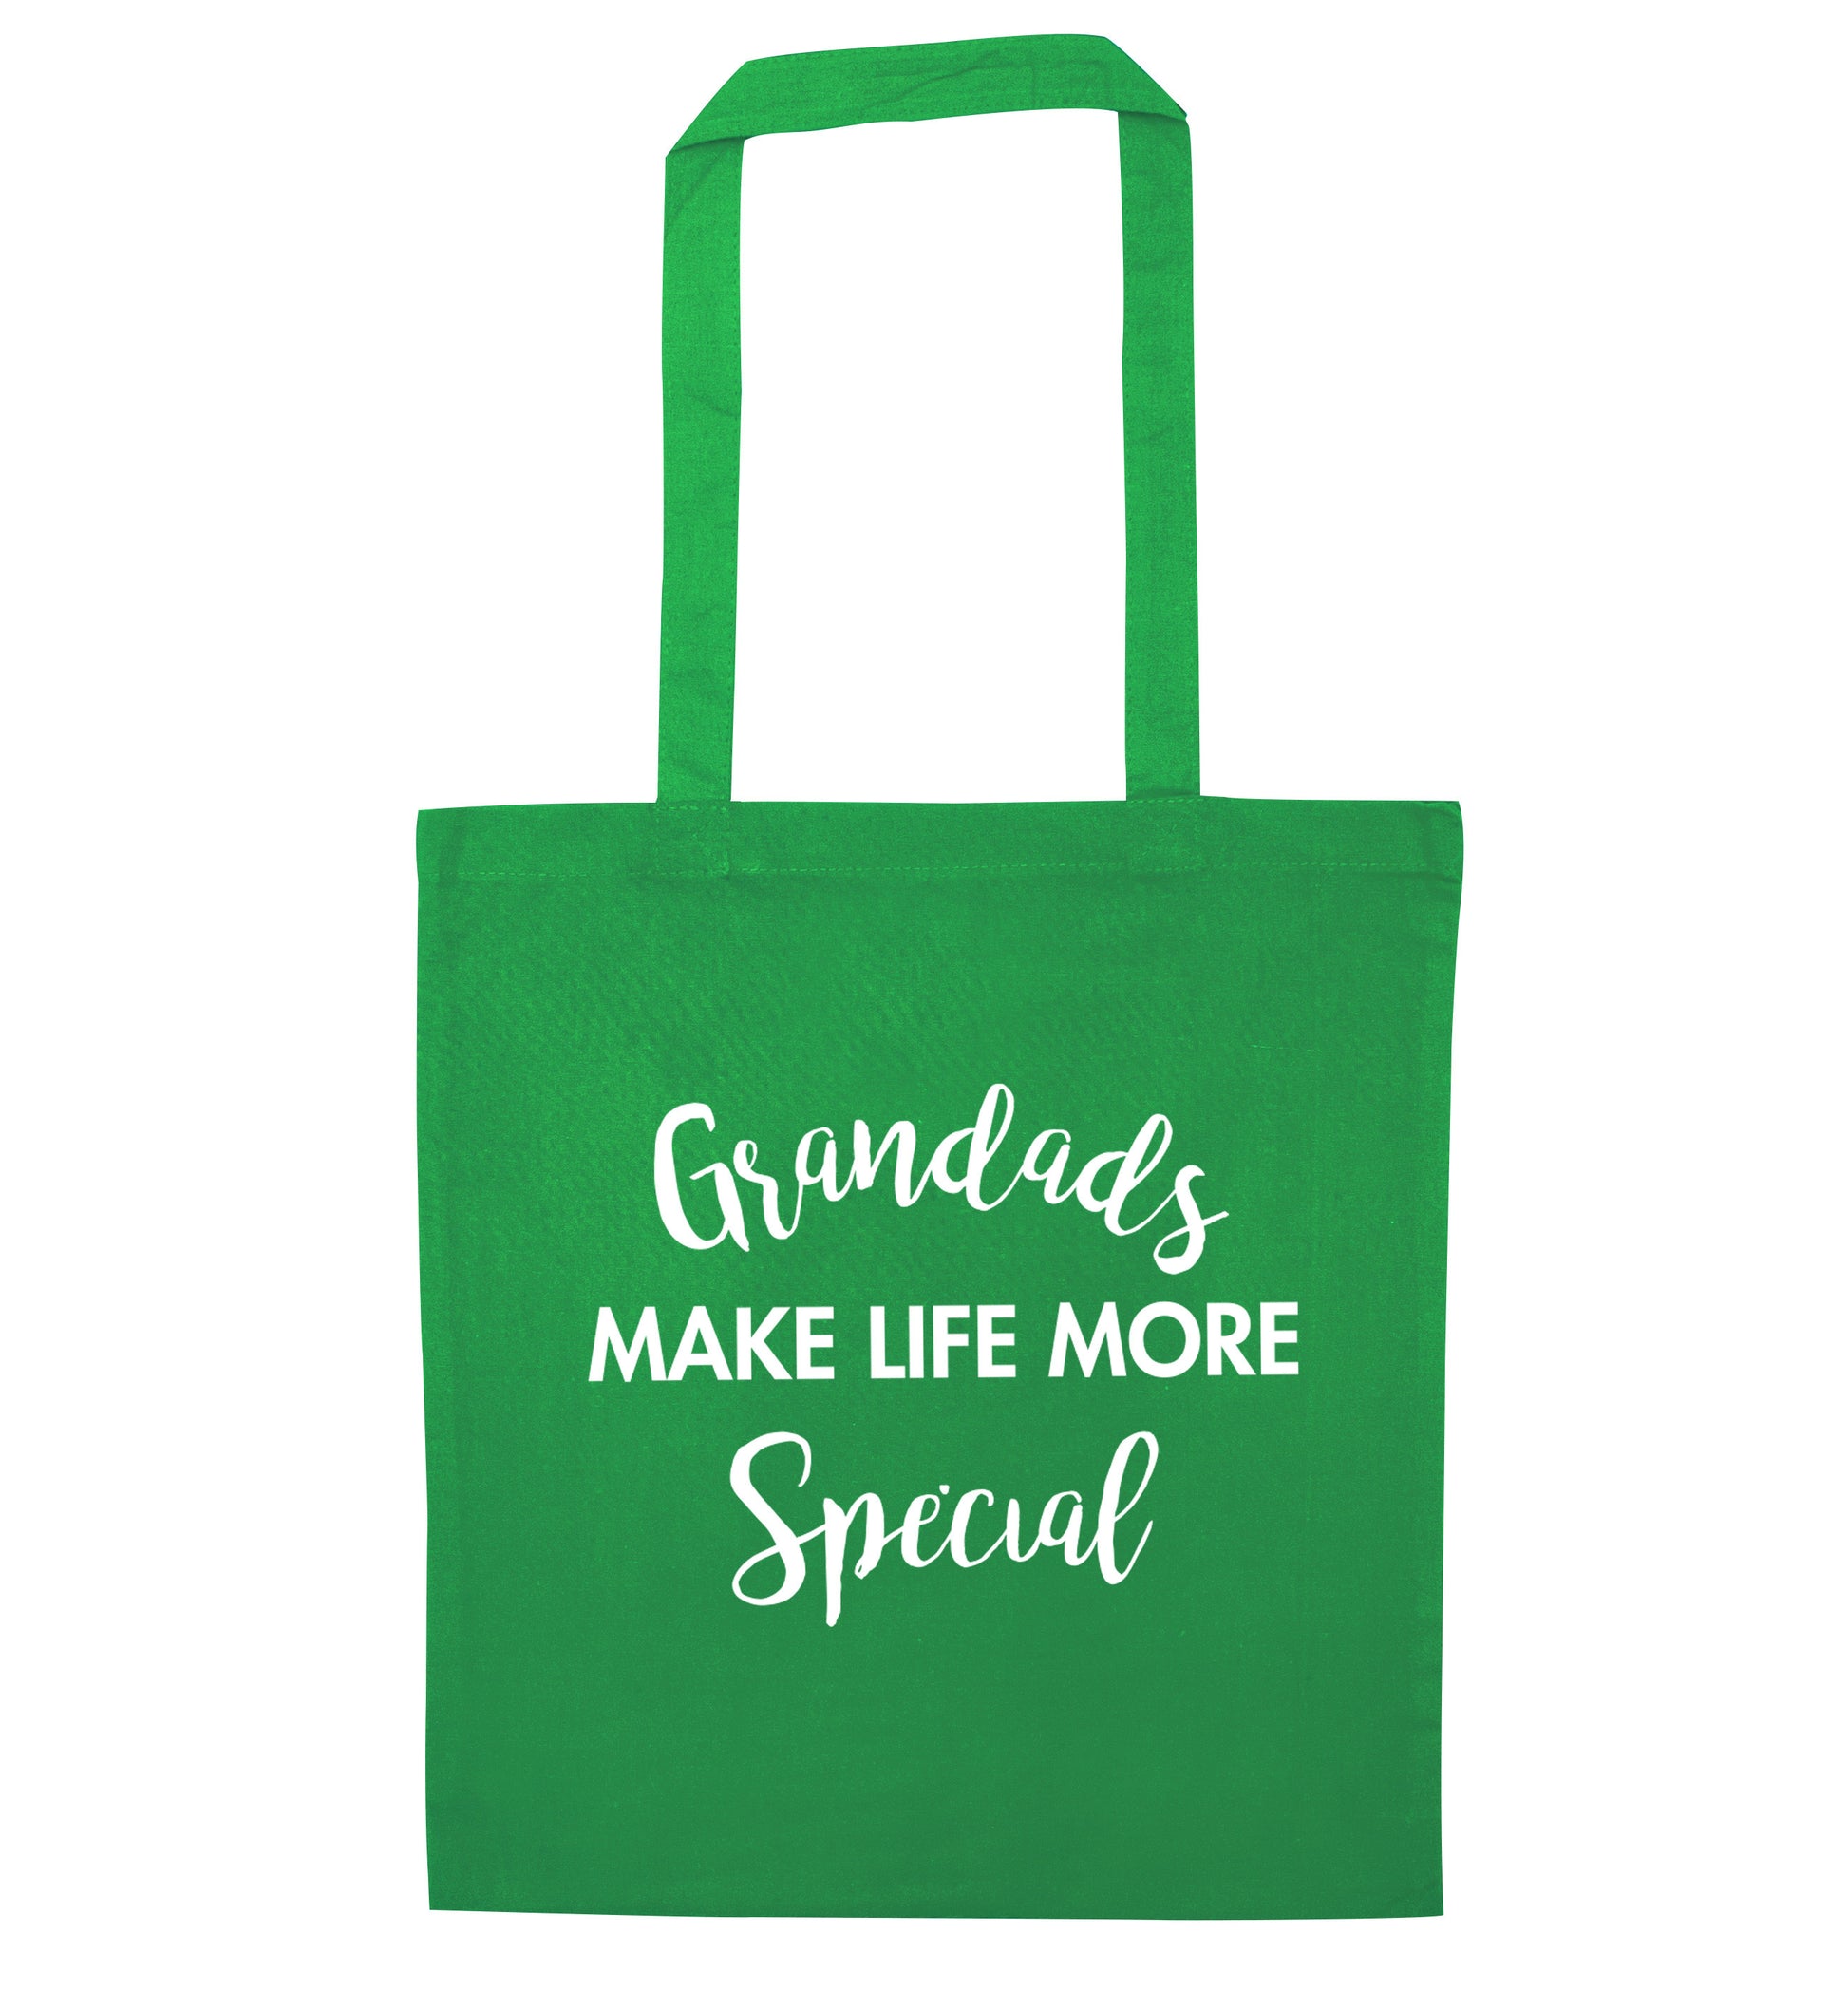 Grandads make life more special green tote bag